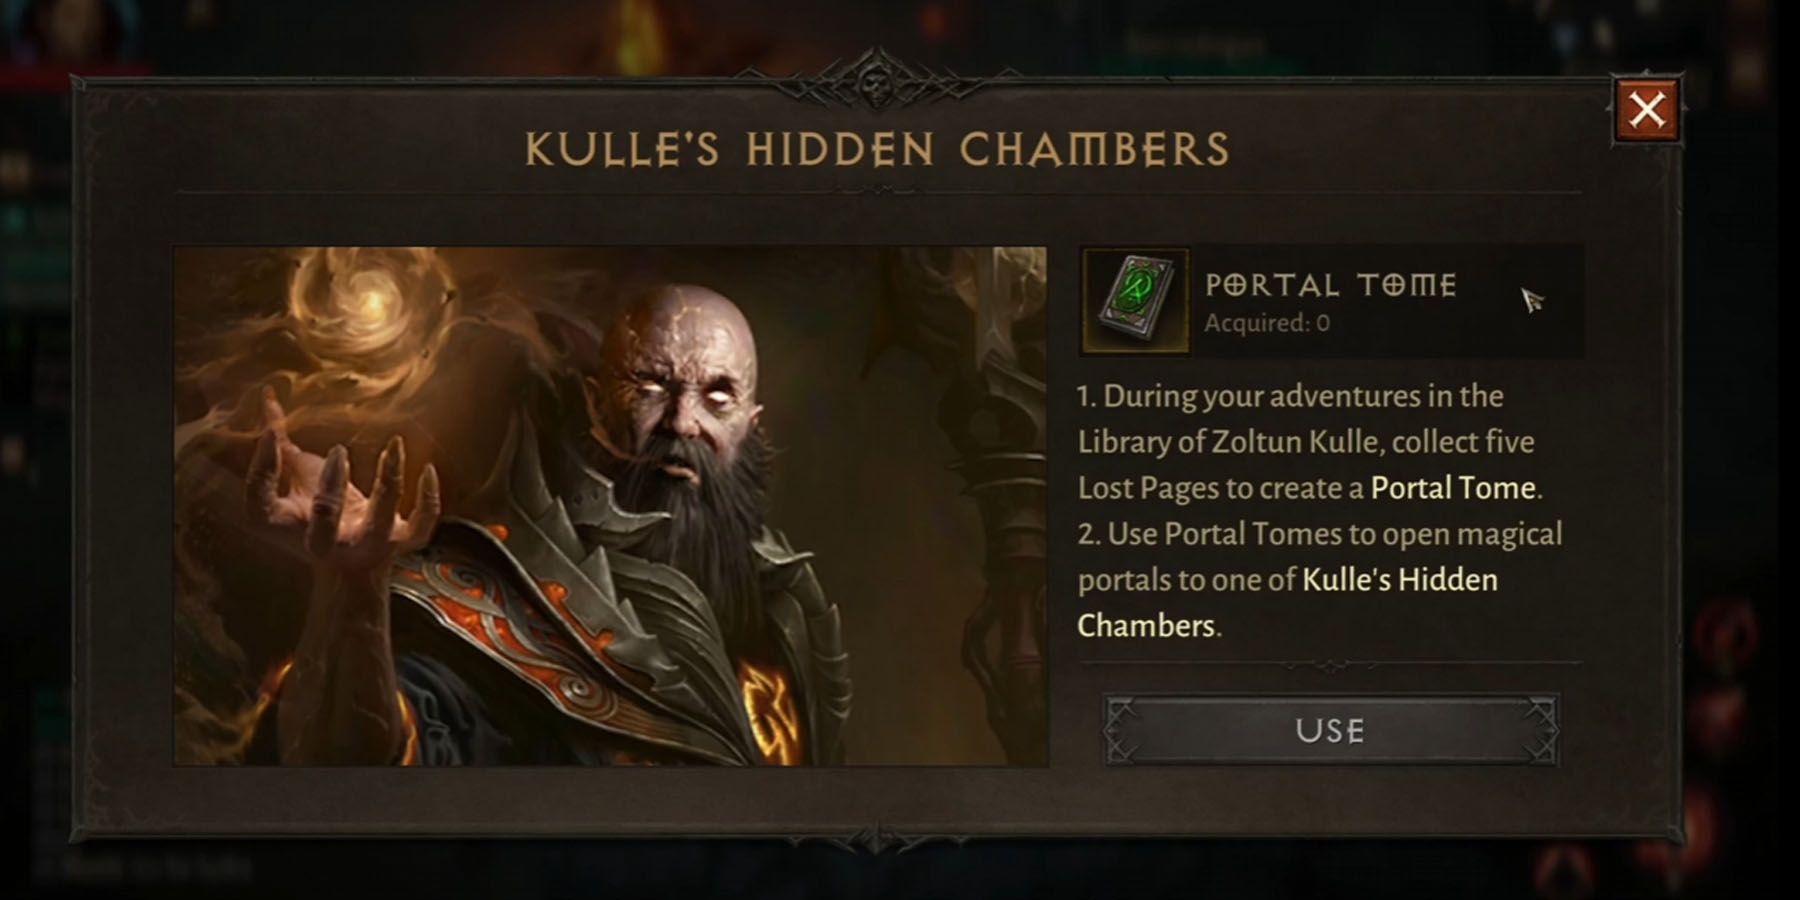 Kulle's Hidden Chambers